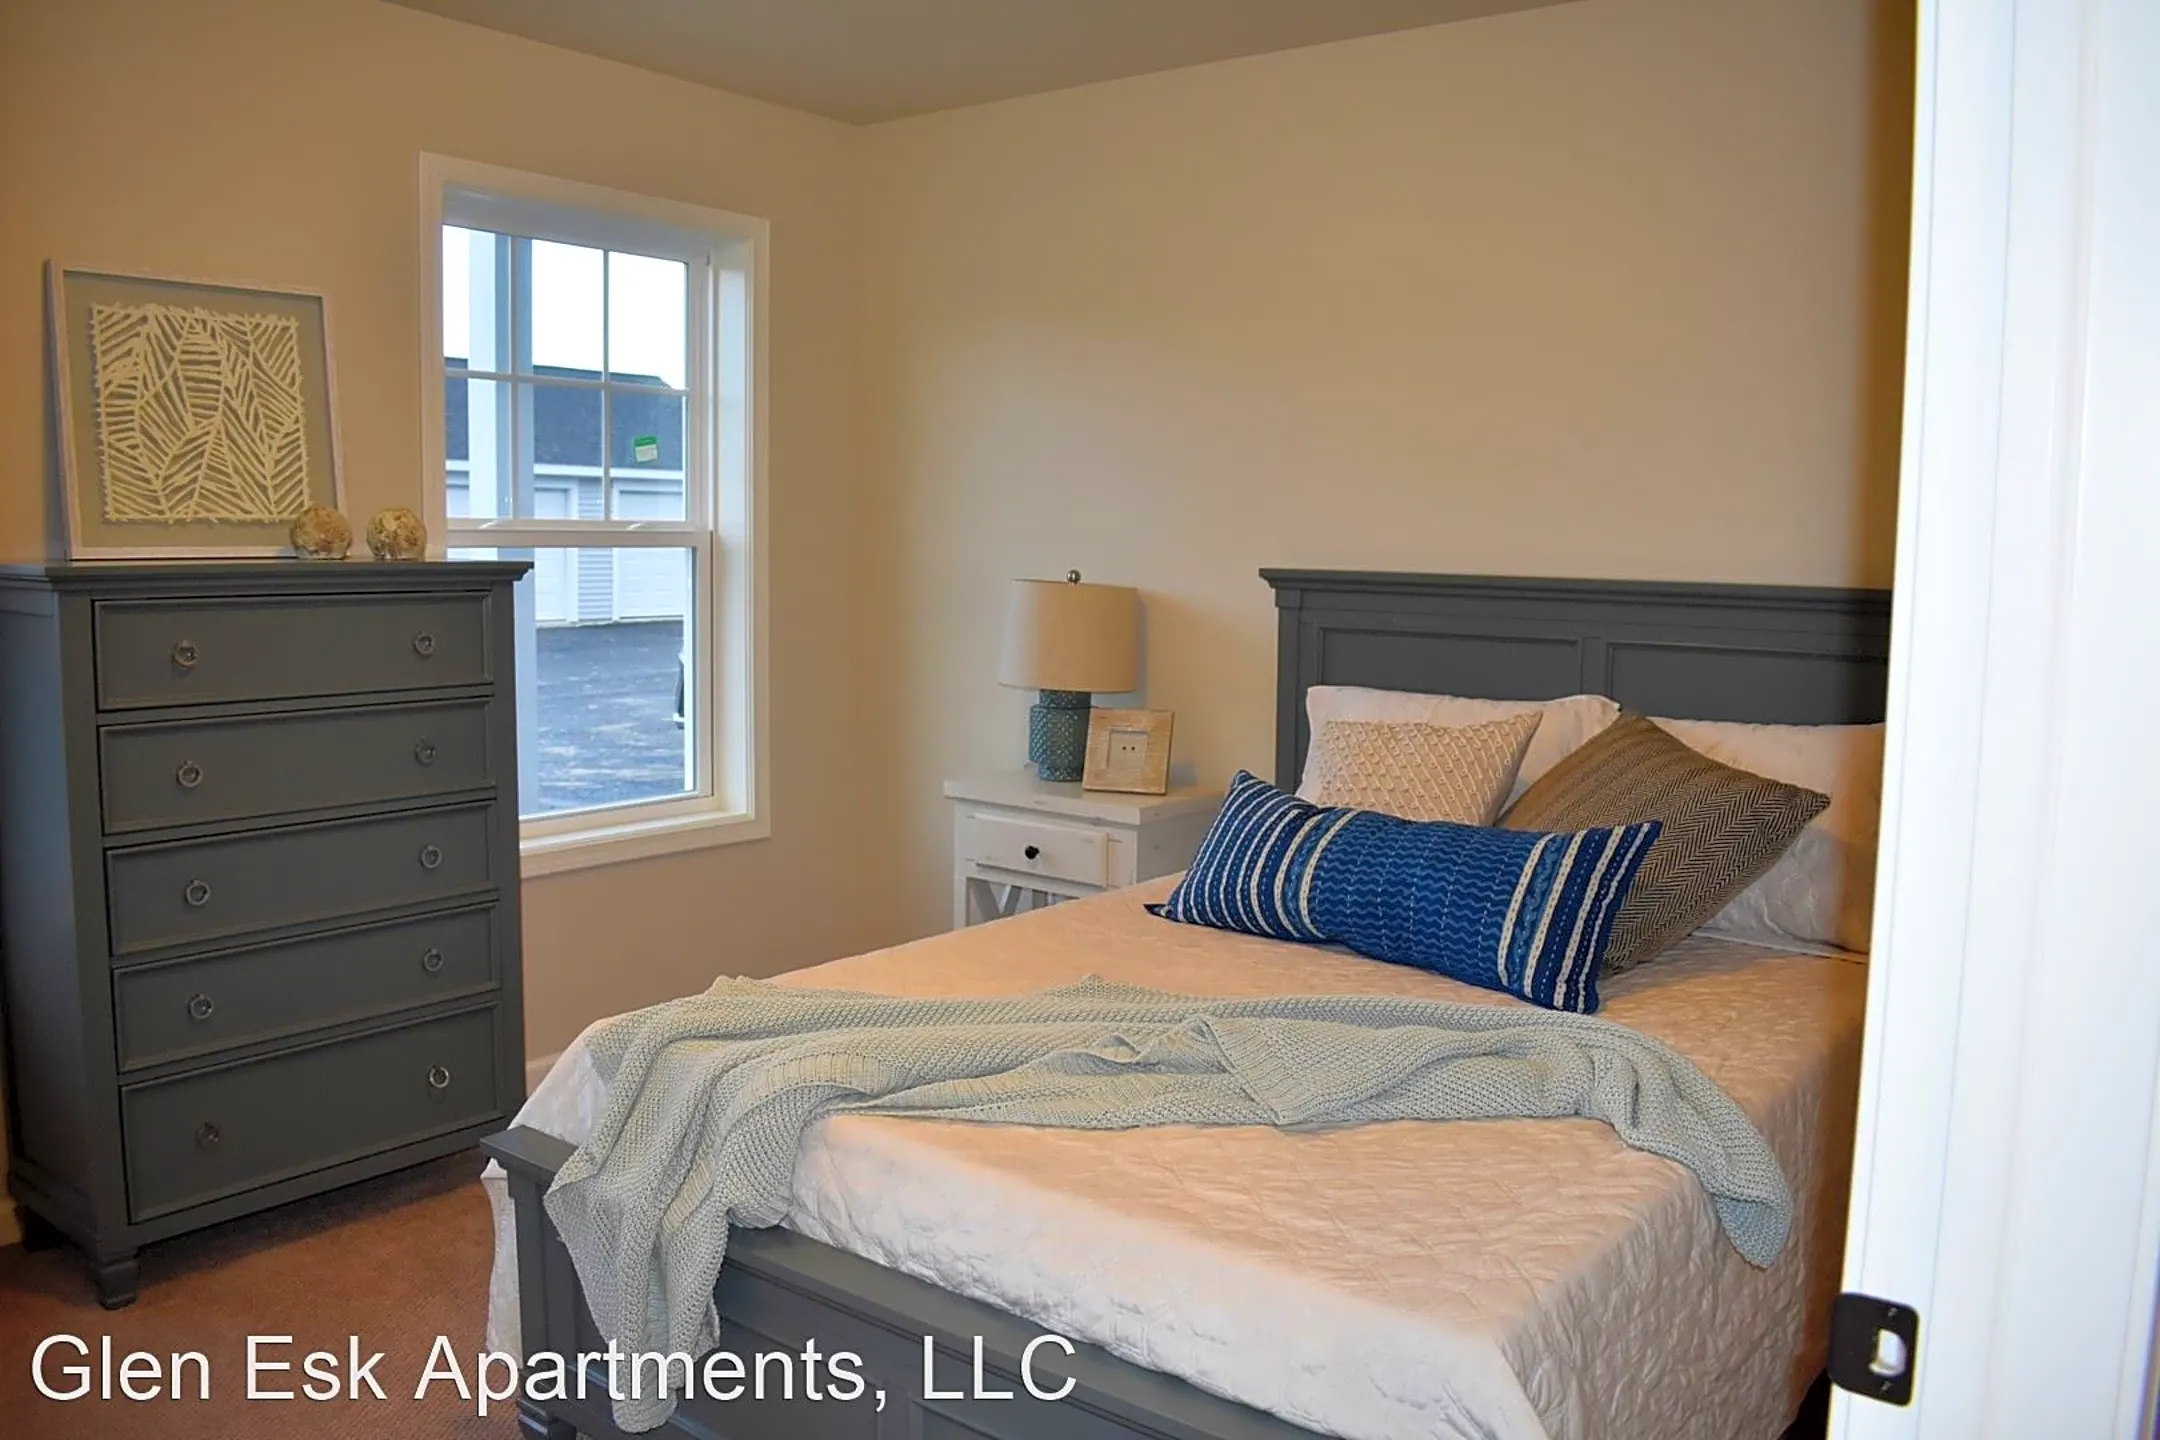 Bedroom - Glen Esk Apartments - Glenville, NY